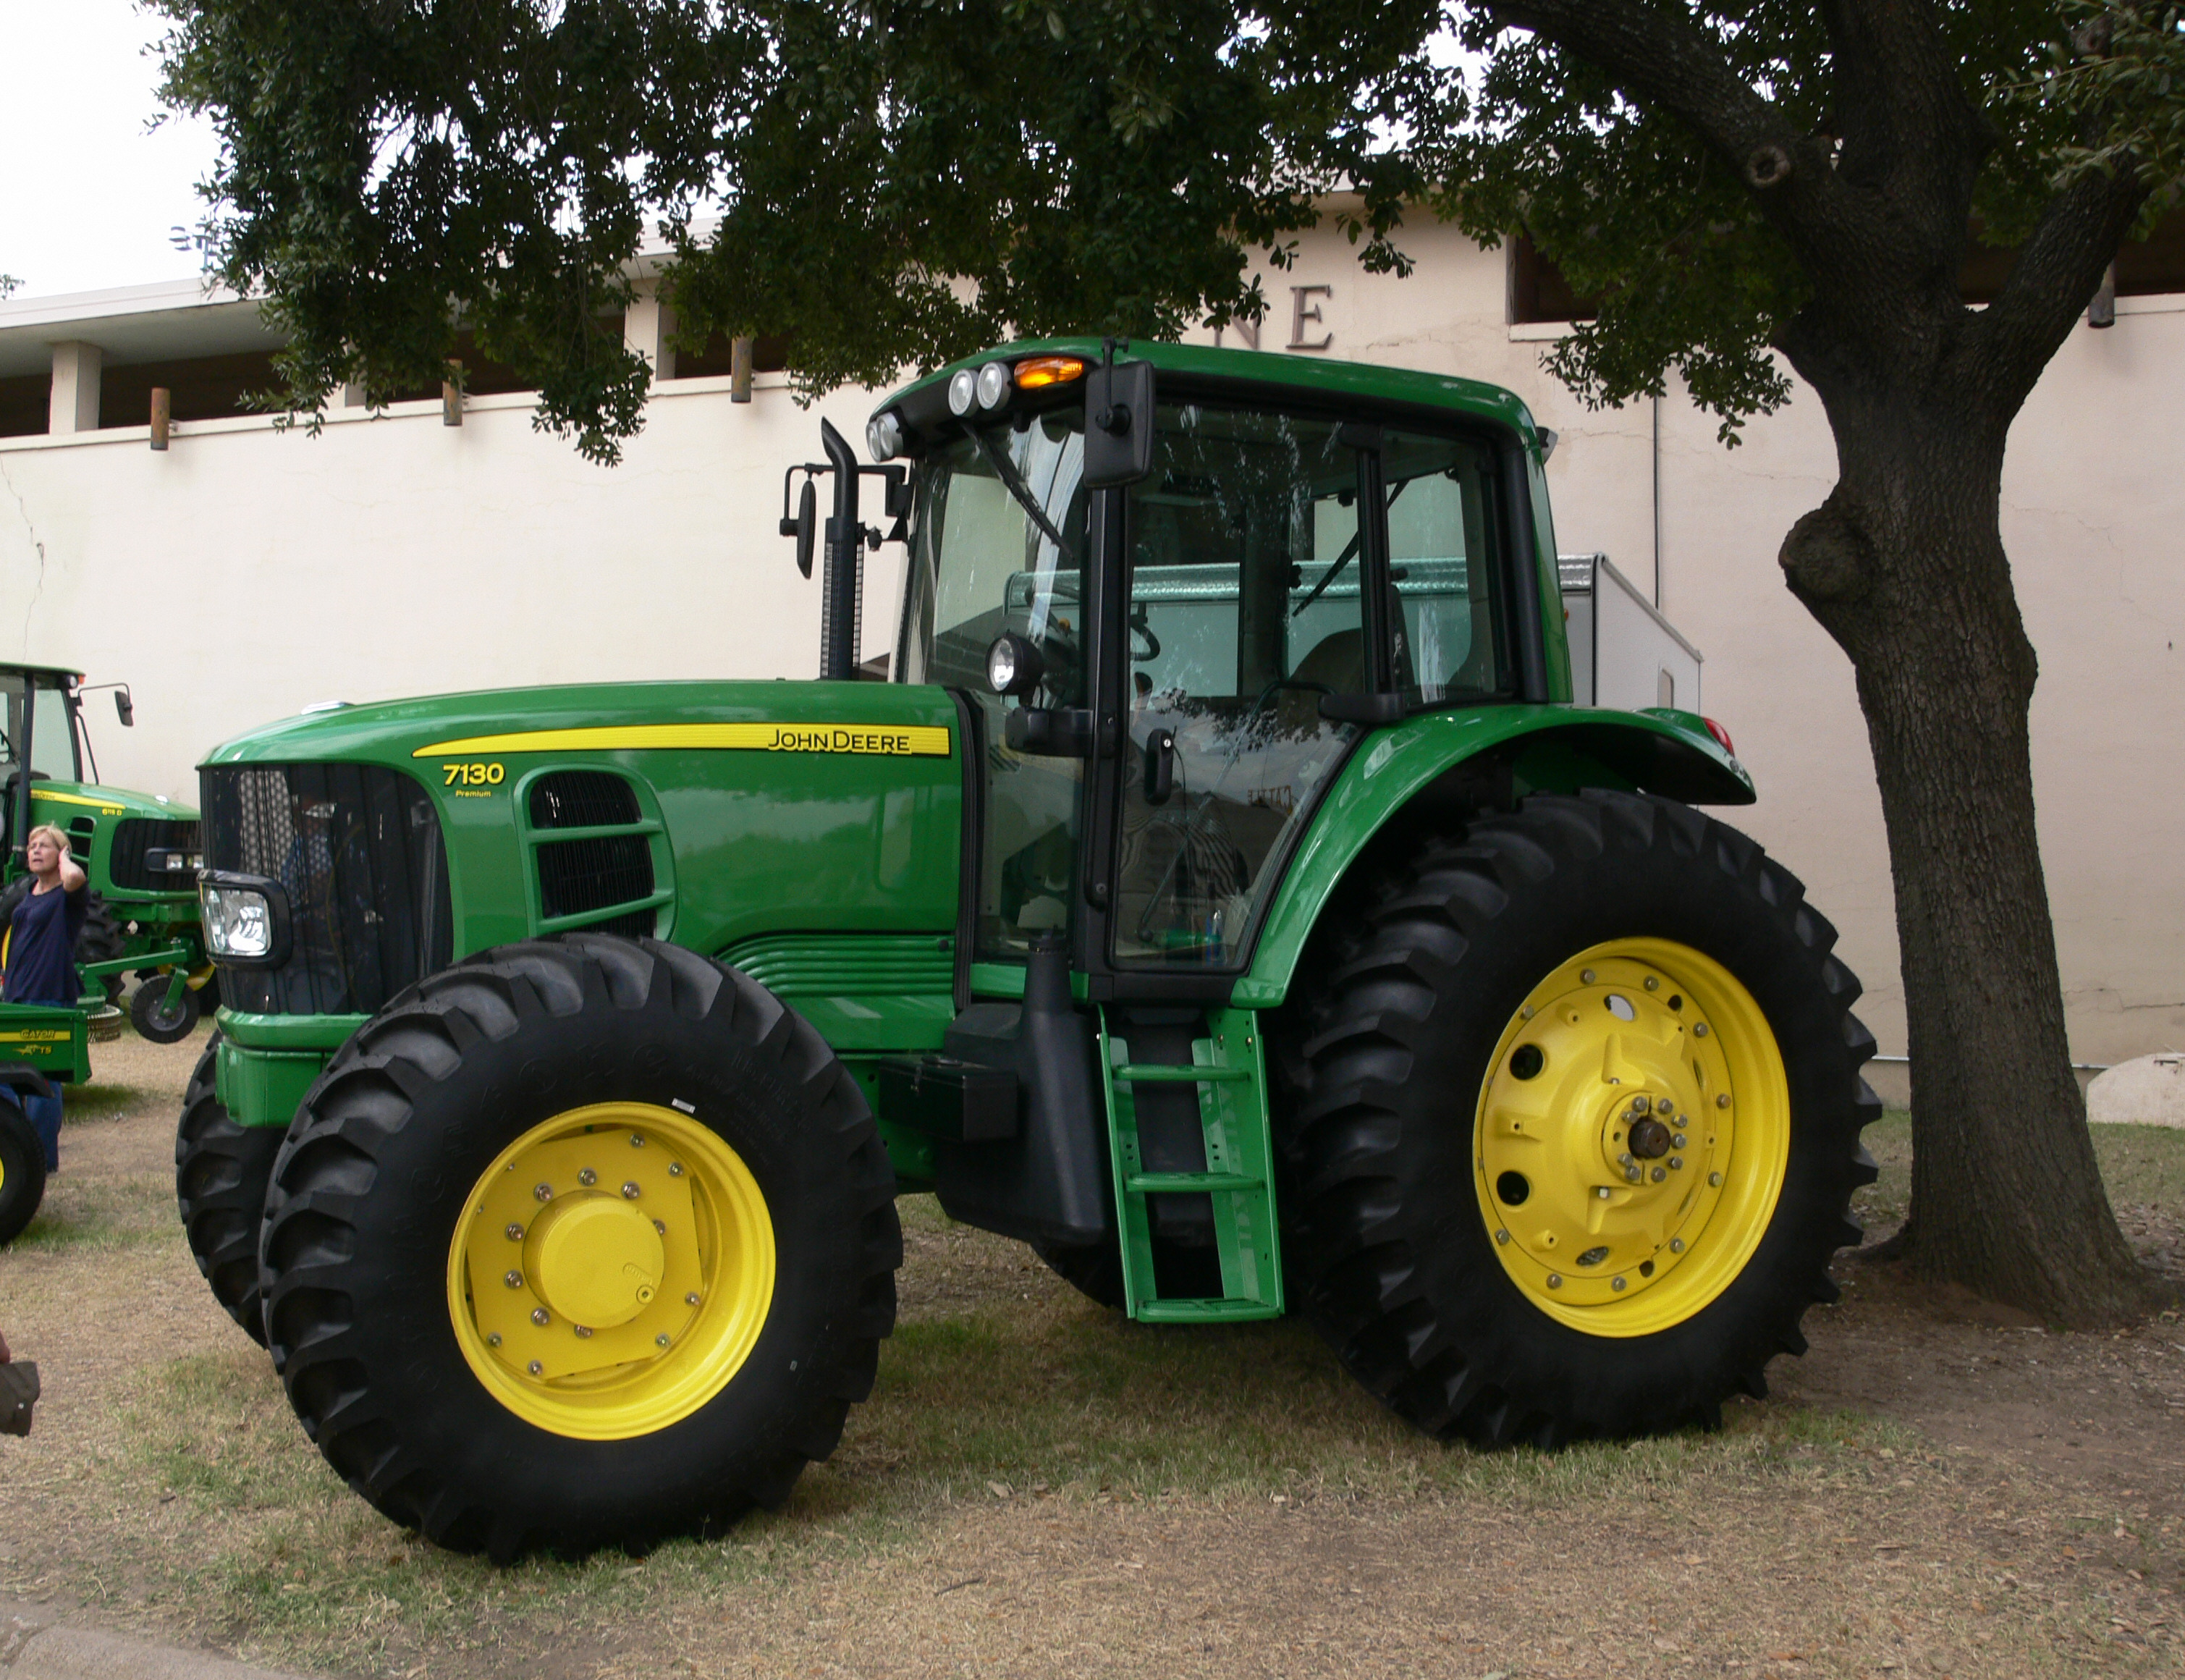 File:Texas State Fair John Deere tractor.jpg - Wikimedia Commons